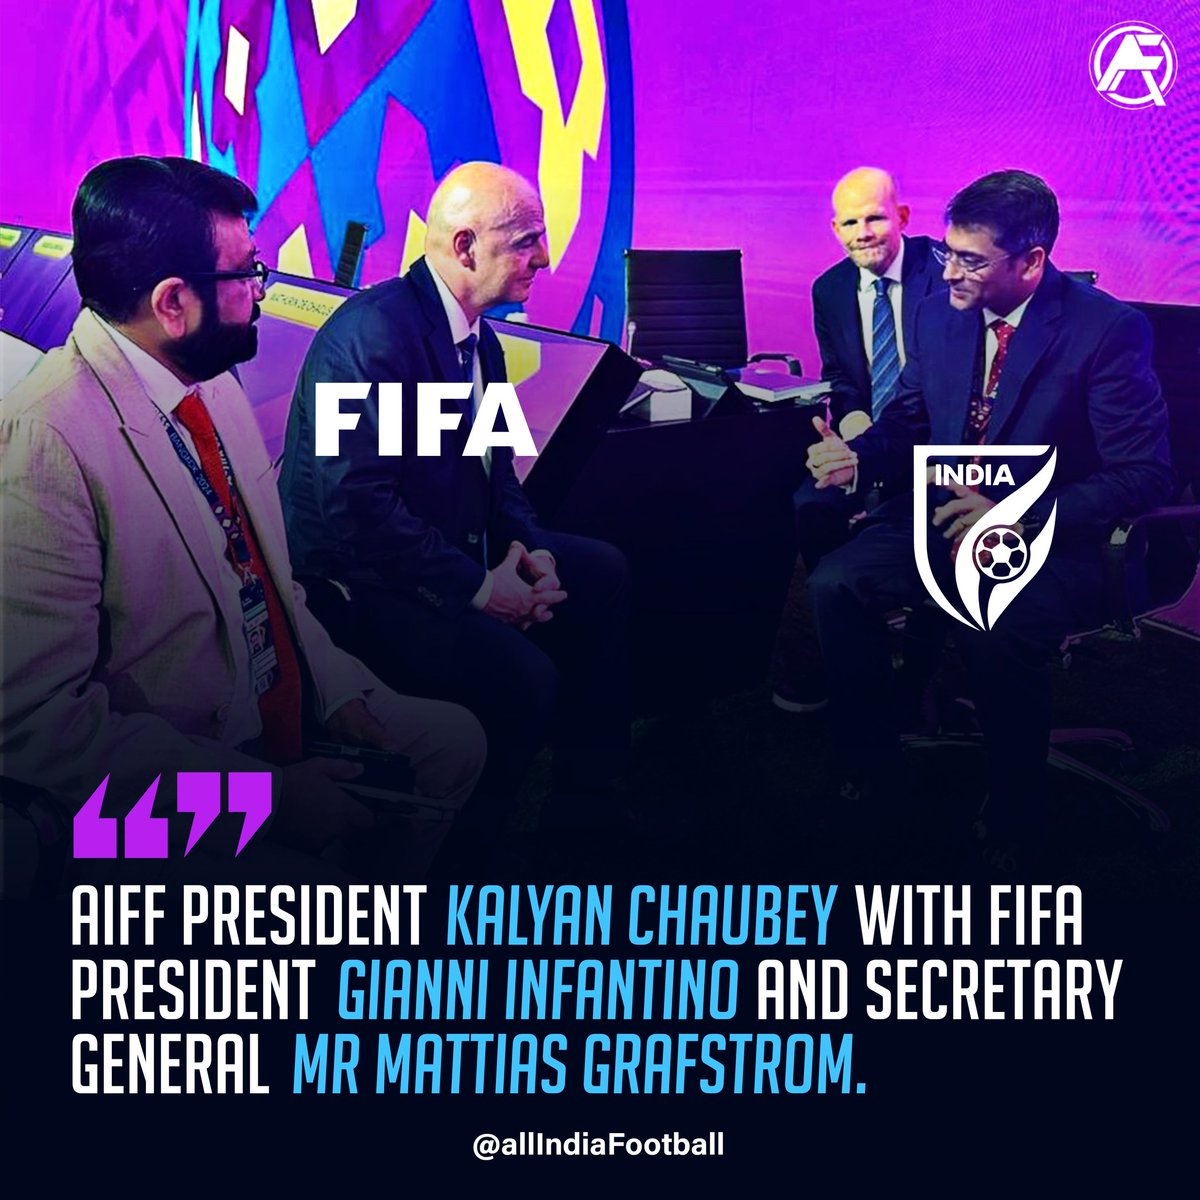 AIFF President Kalyan Chaubey meets FIFA President Gianni Infantino and Secretary General Mr Mattias Grafstrom 🤩🇮🇳 #IndianFootball #BlueTigers #BackTheBlue #AIFF #FIFA #India #allindiafootball